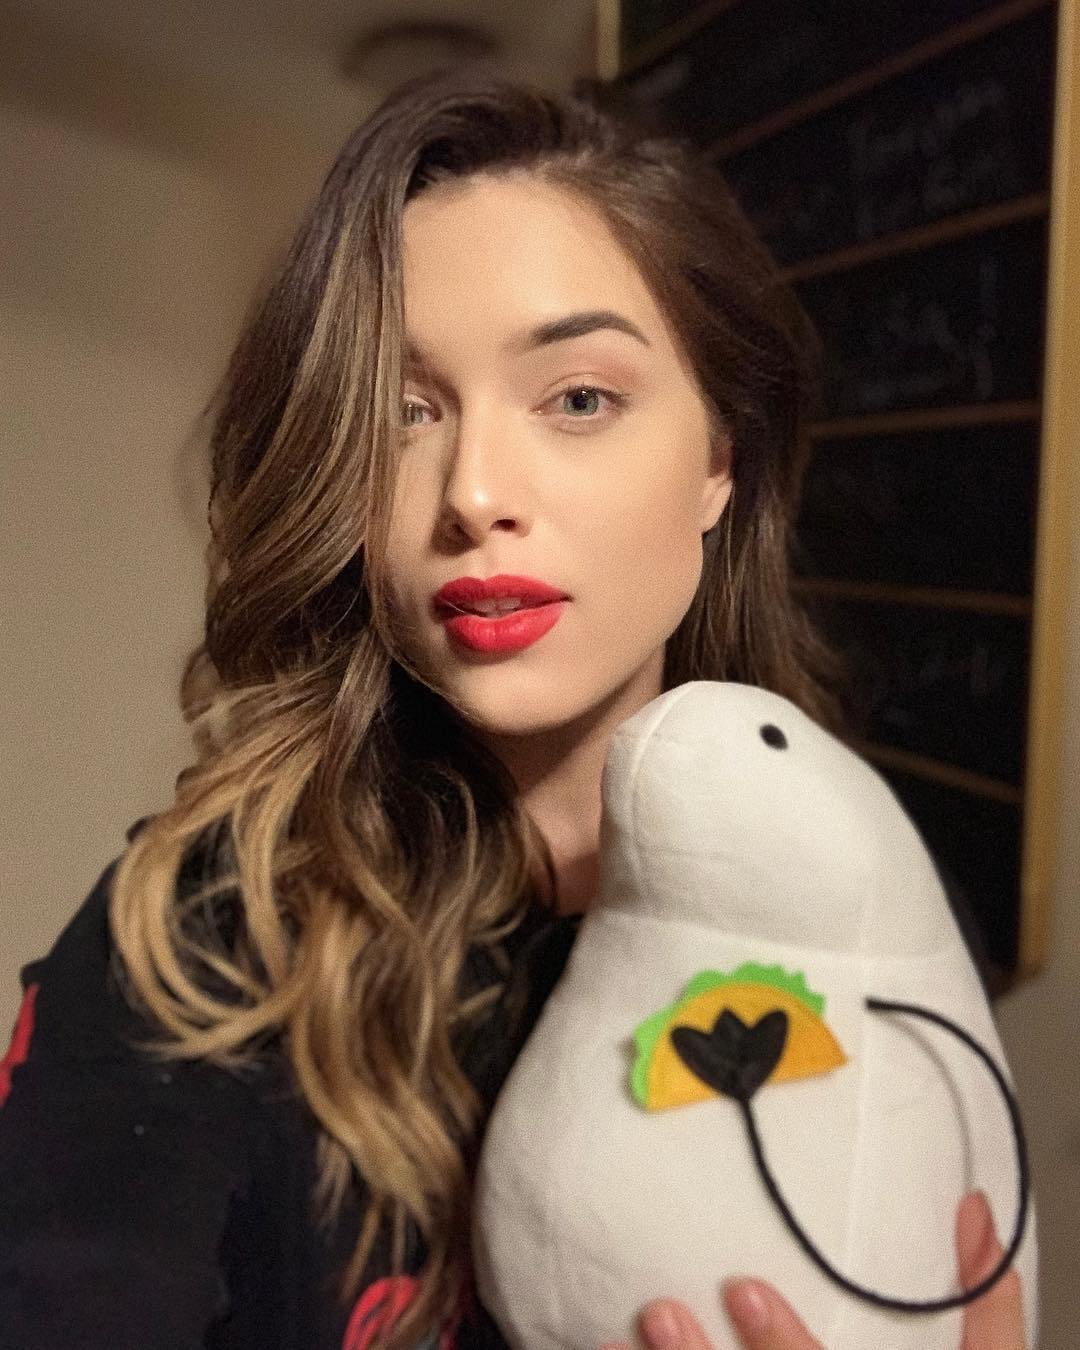  Stuffed animal selfies 